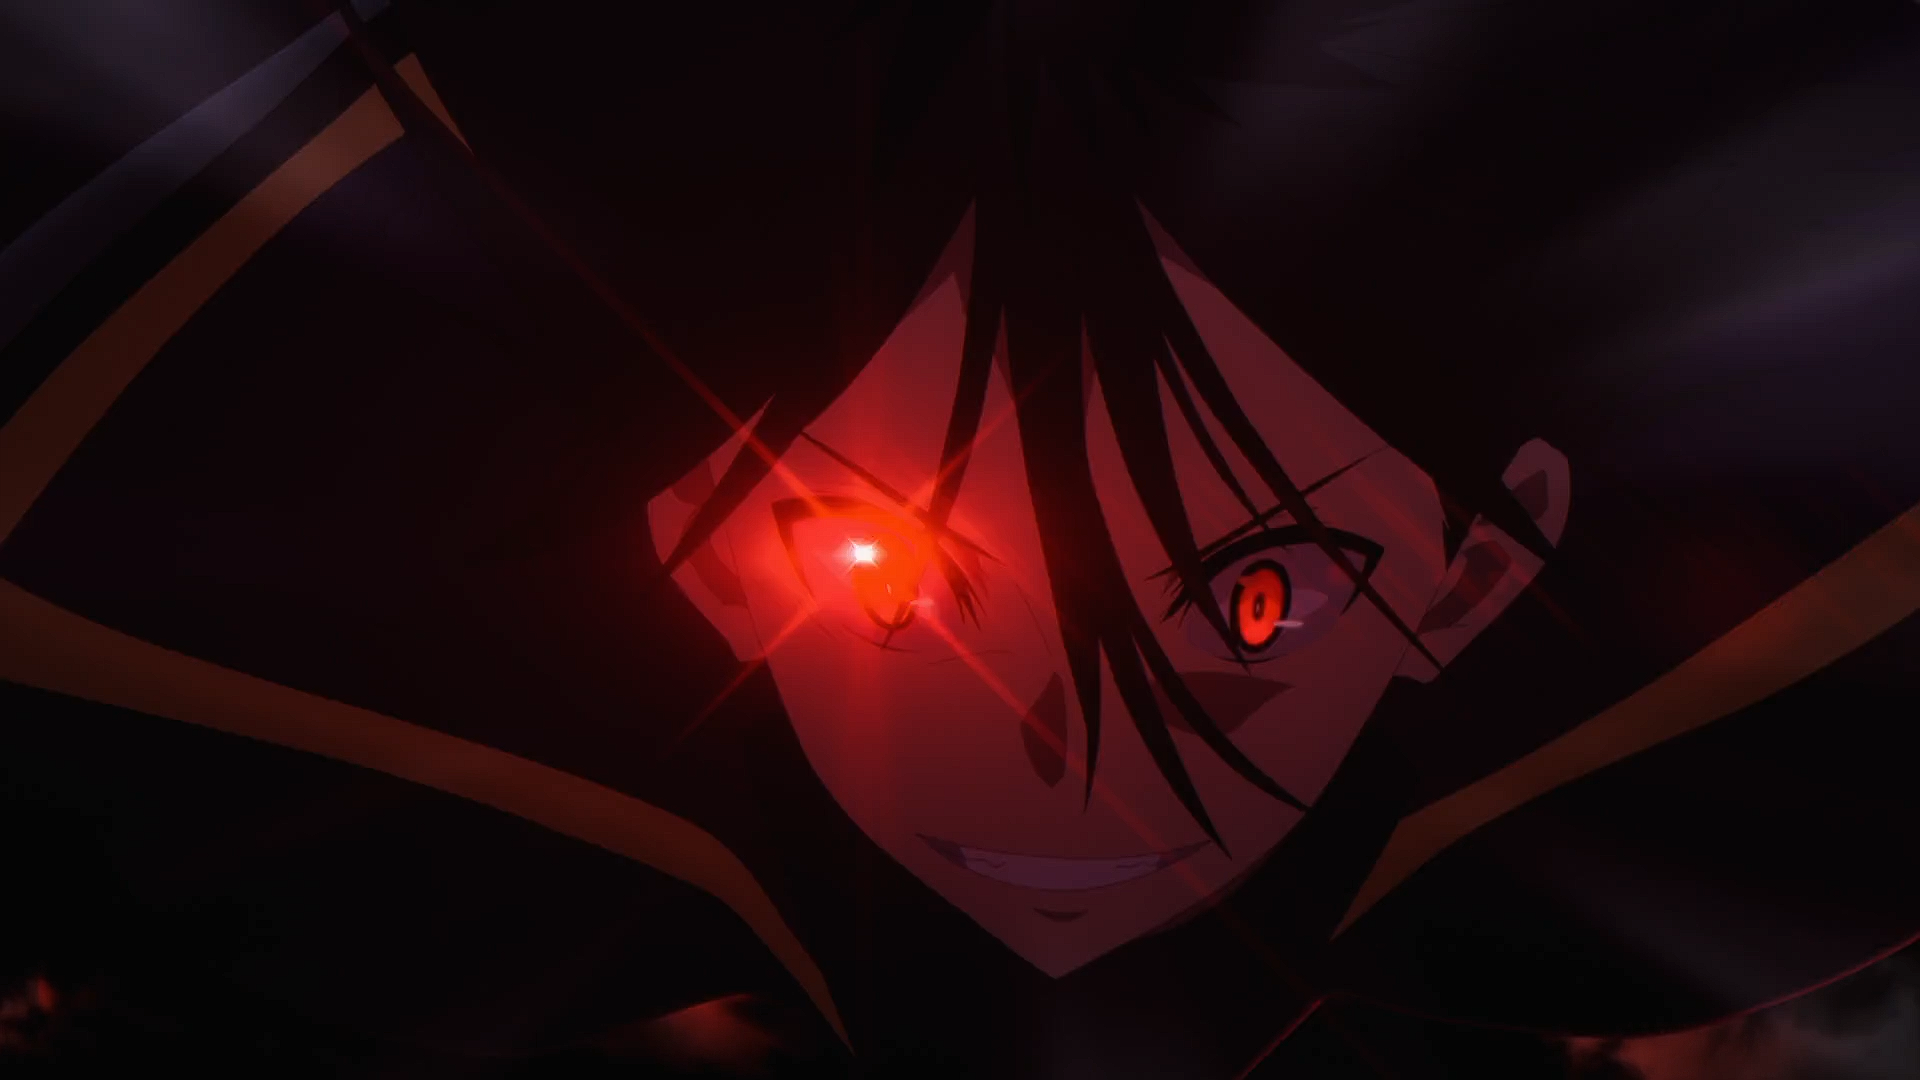 Kage no Jitsuryokusha ni Naritakute!  The Eminence in Shadow - Episode 2  discussion : r/anime